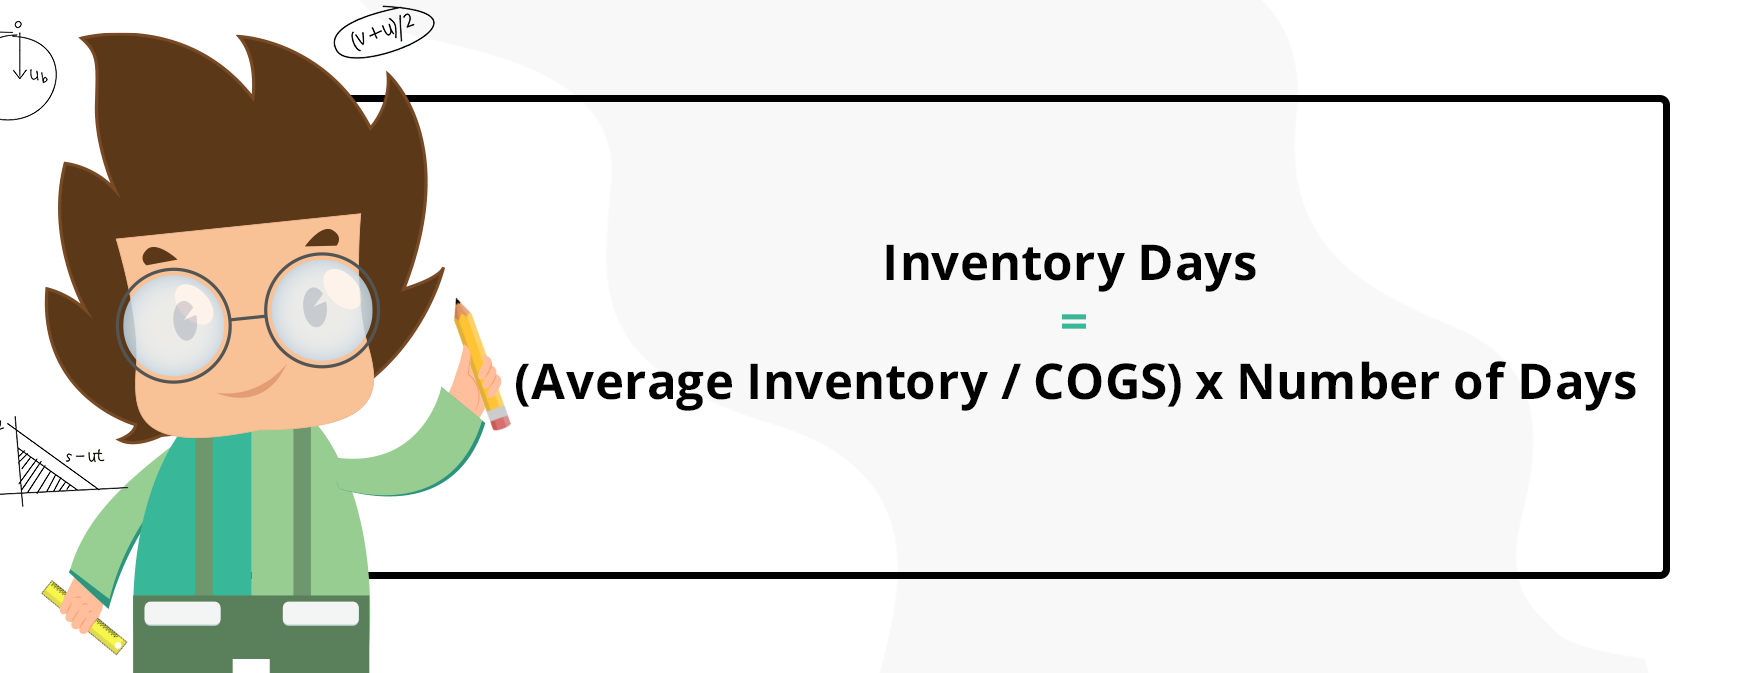 Inventory Days